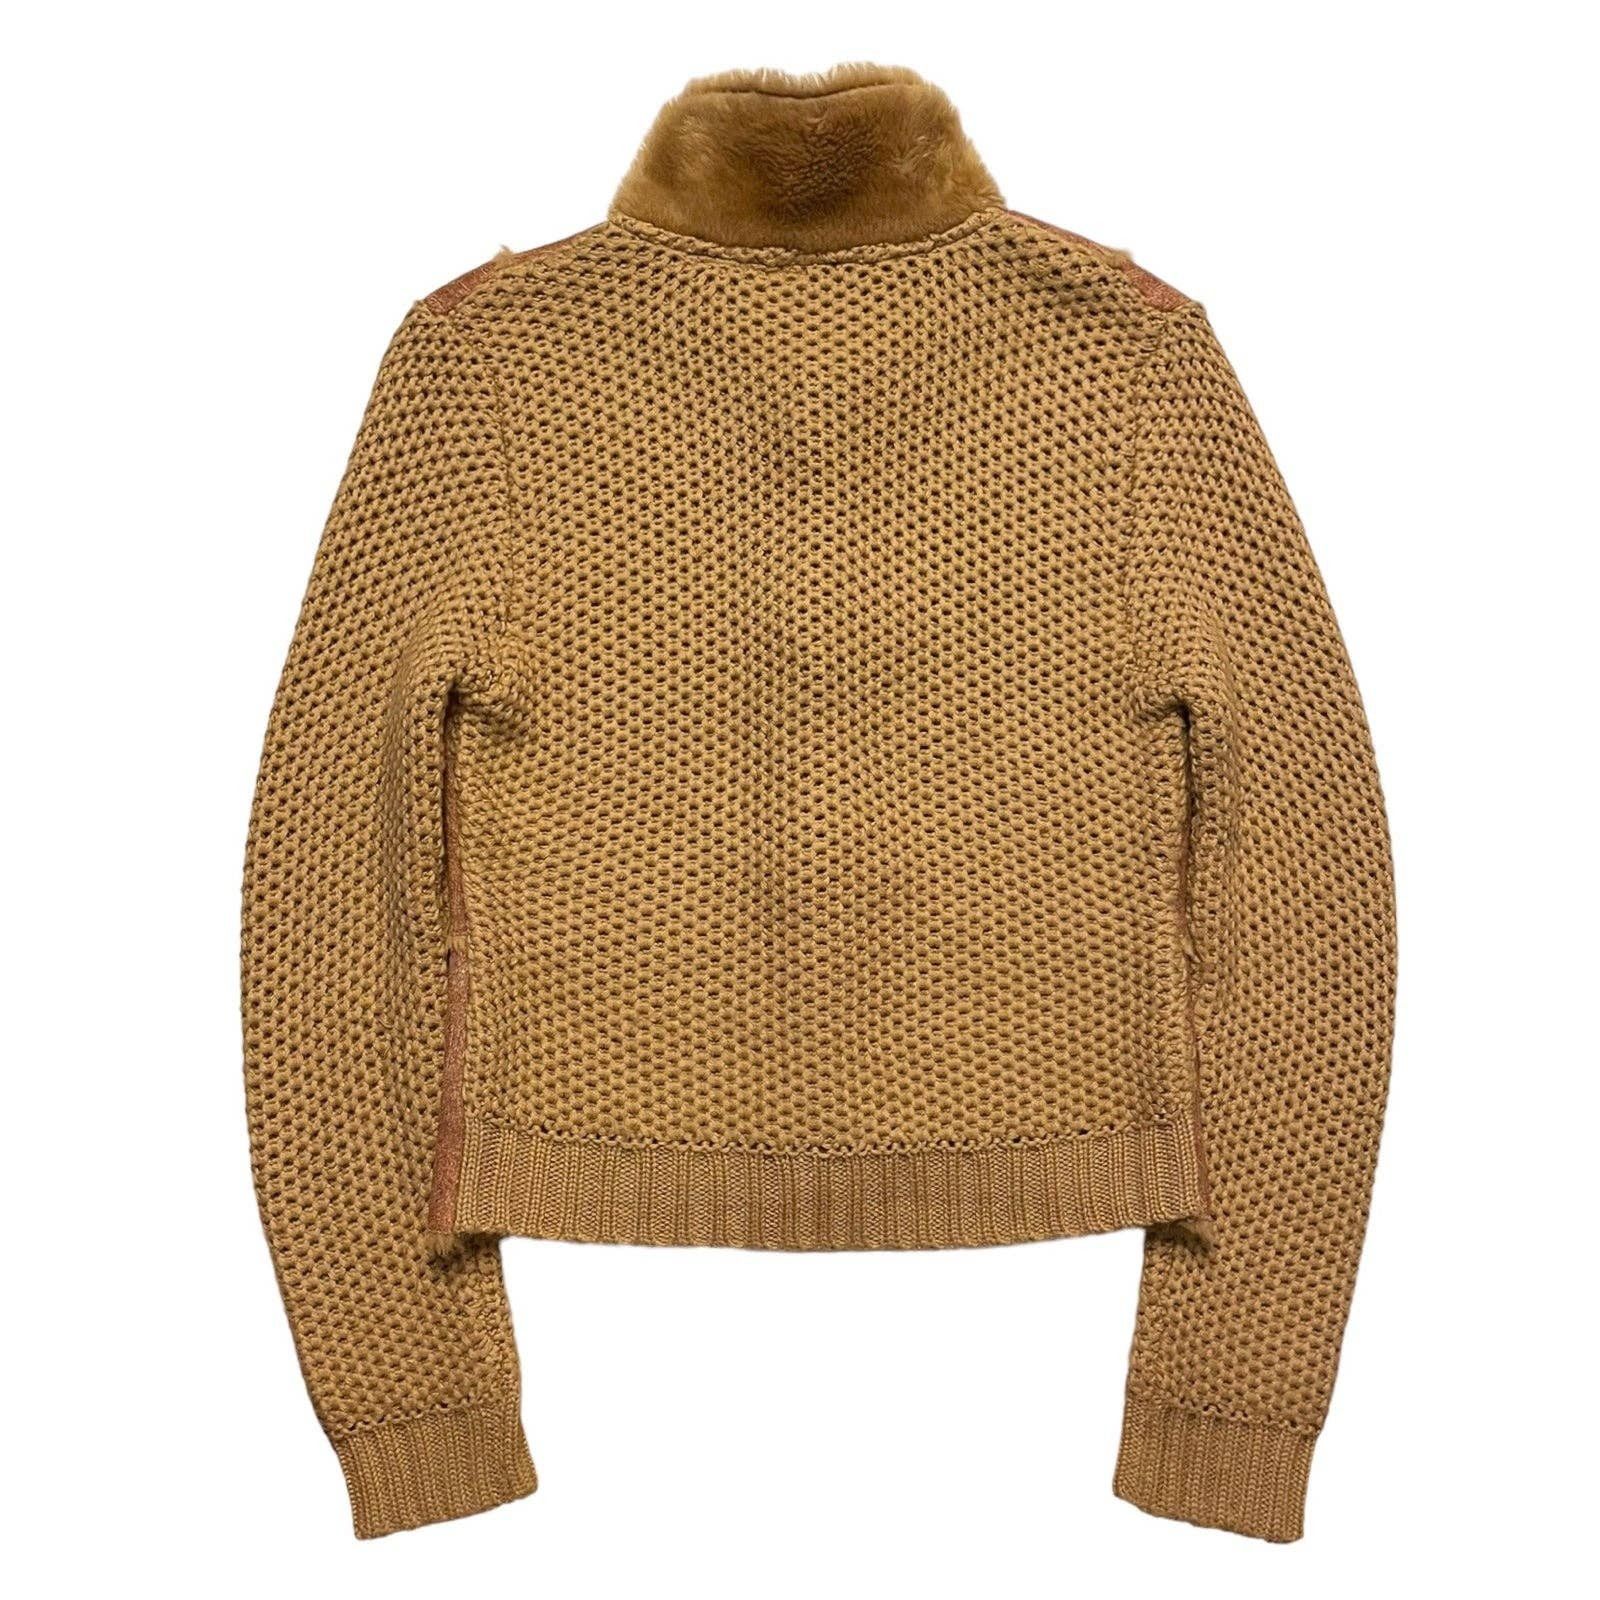 Vintage Vintage Y2K grunge faux shearling knit sweater jacket Size L Size L / US 10 / IT 46 - 6 Thumbnail